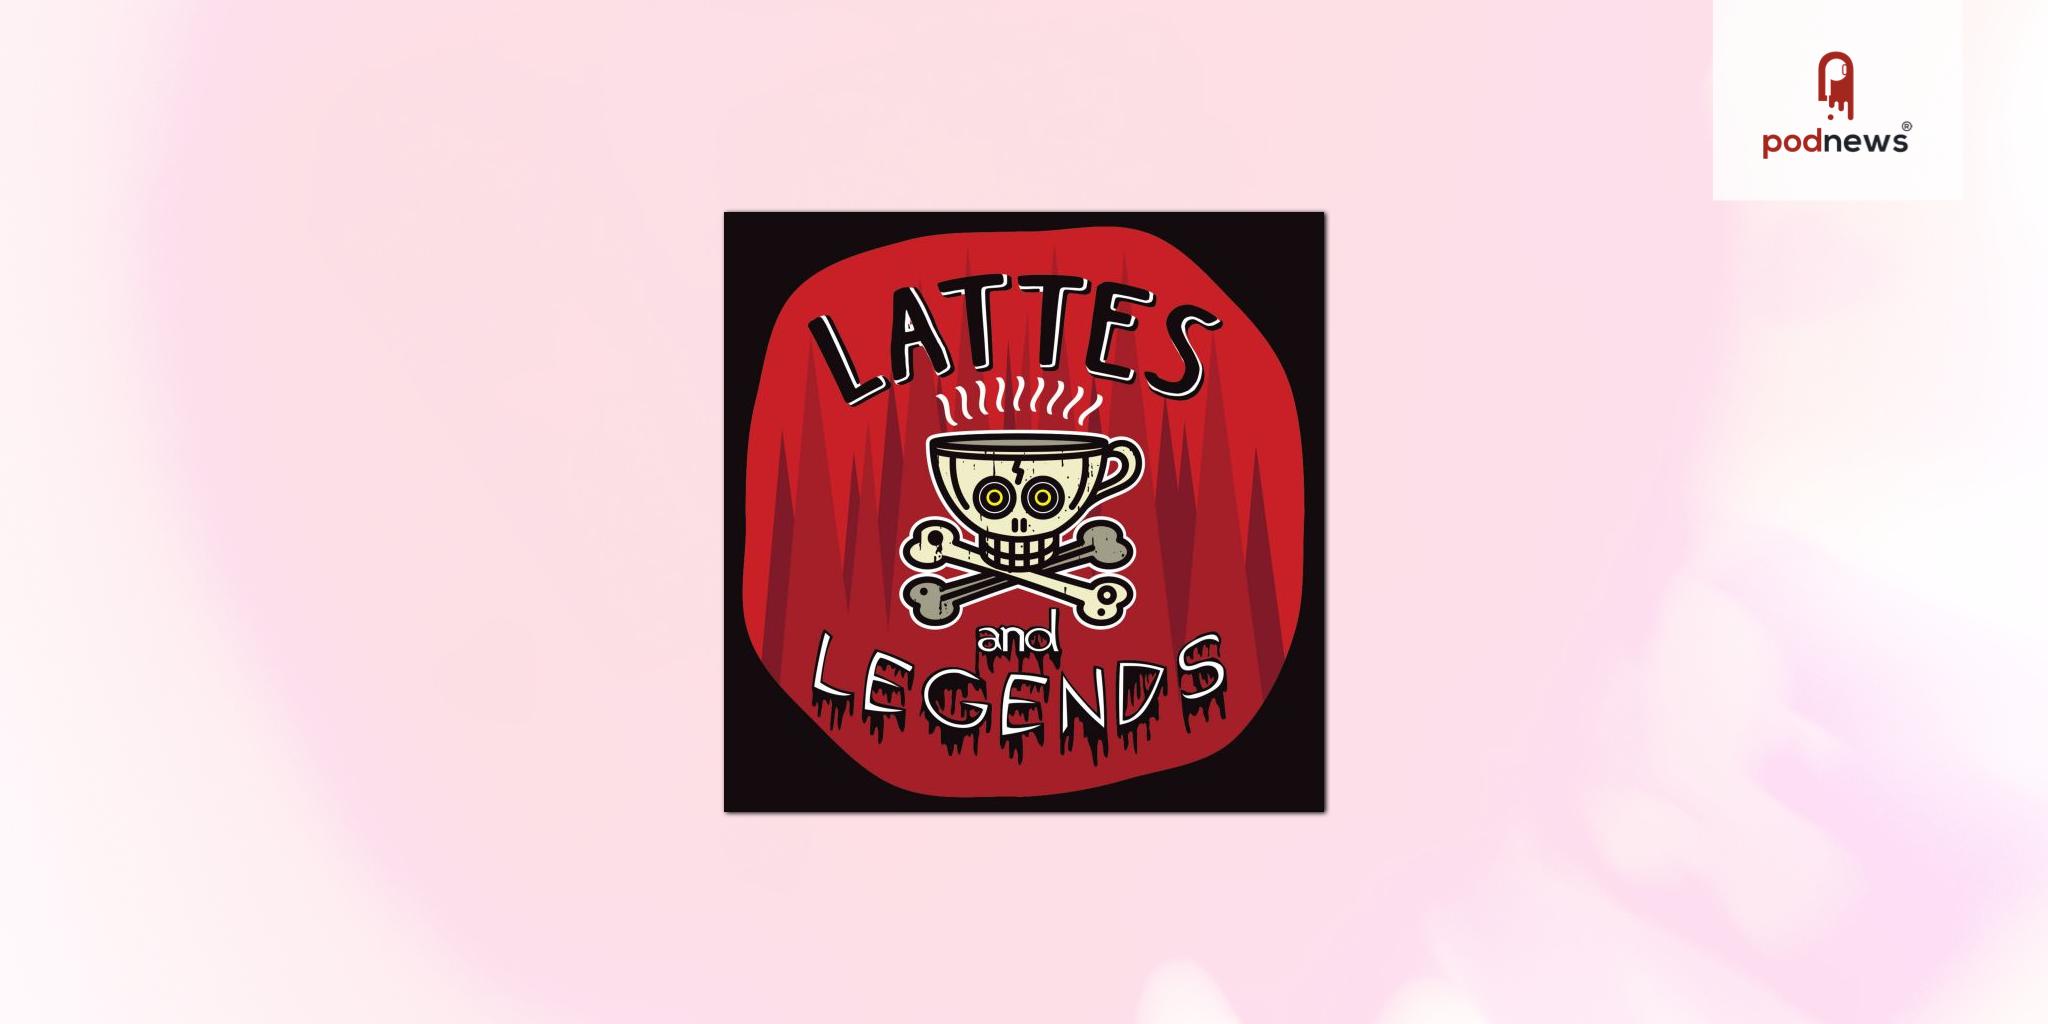 legends of lattes